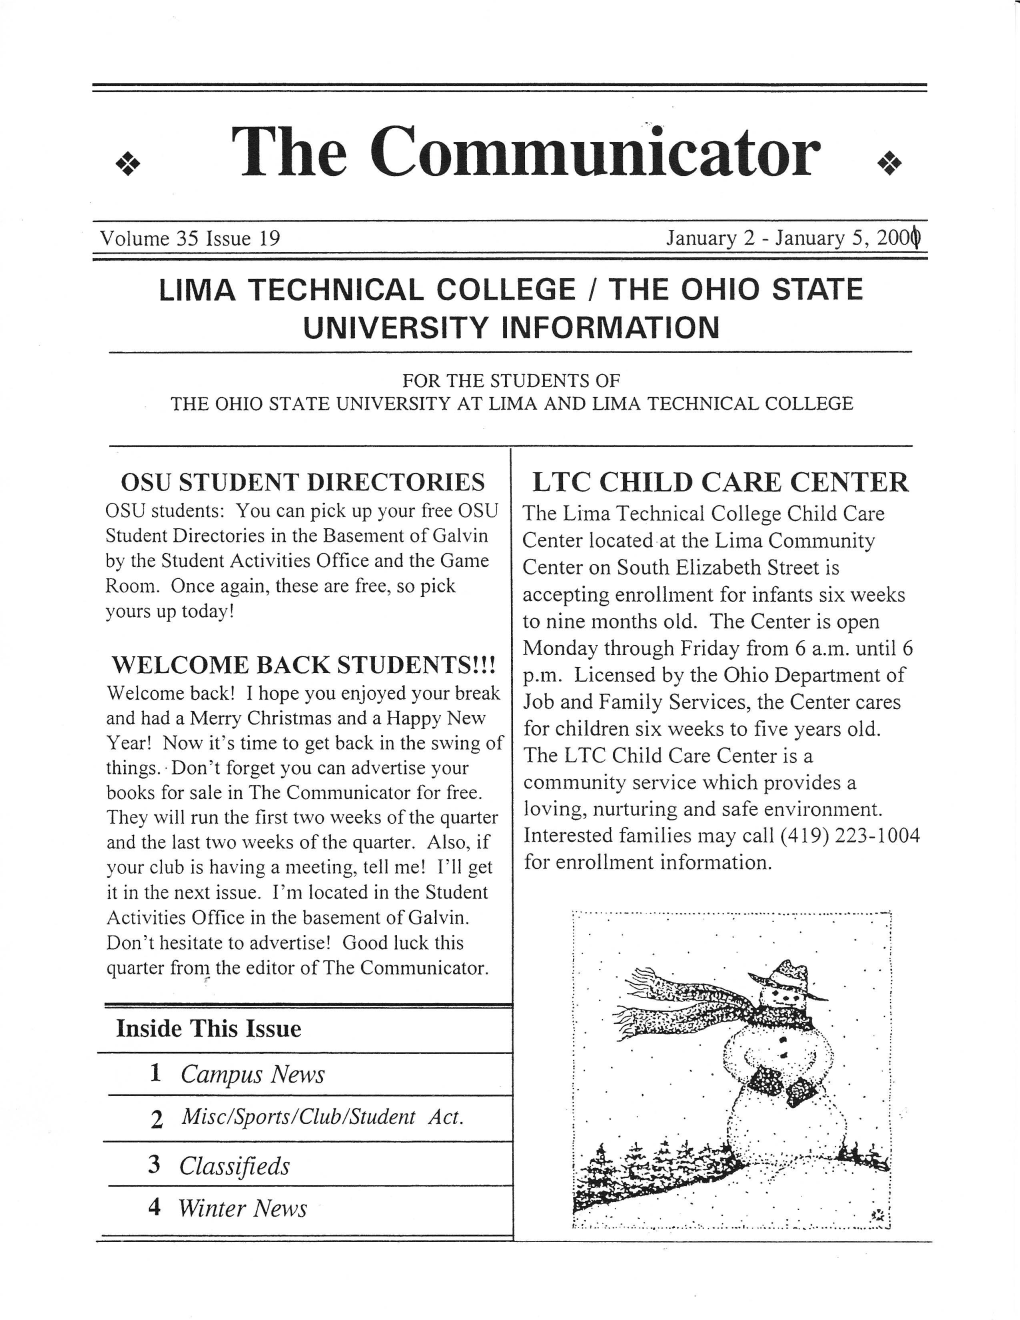 The Communicator